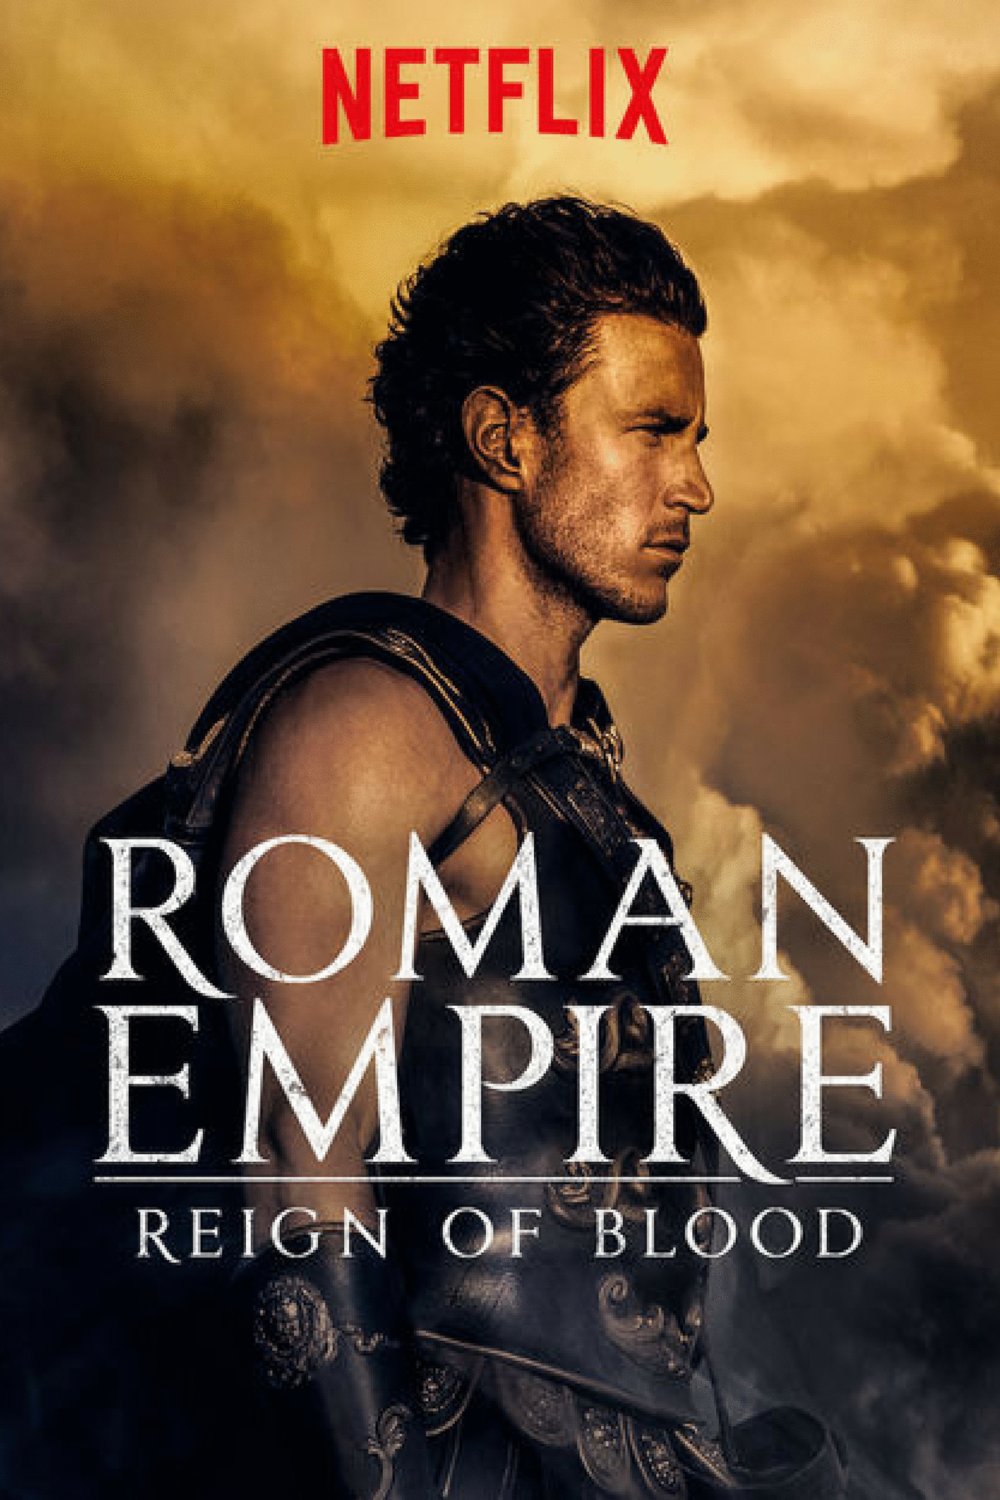 Poster of the movie Roman Empire